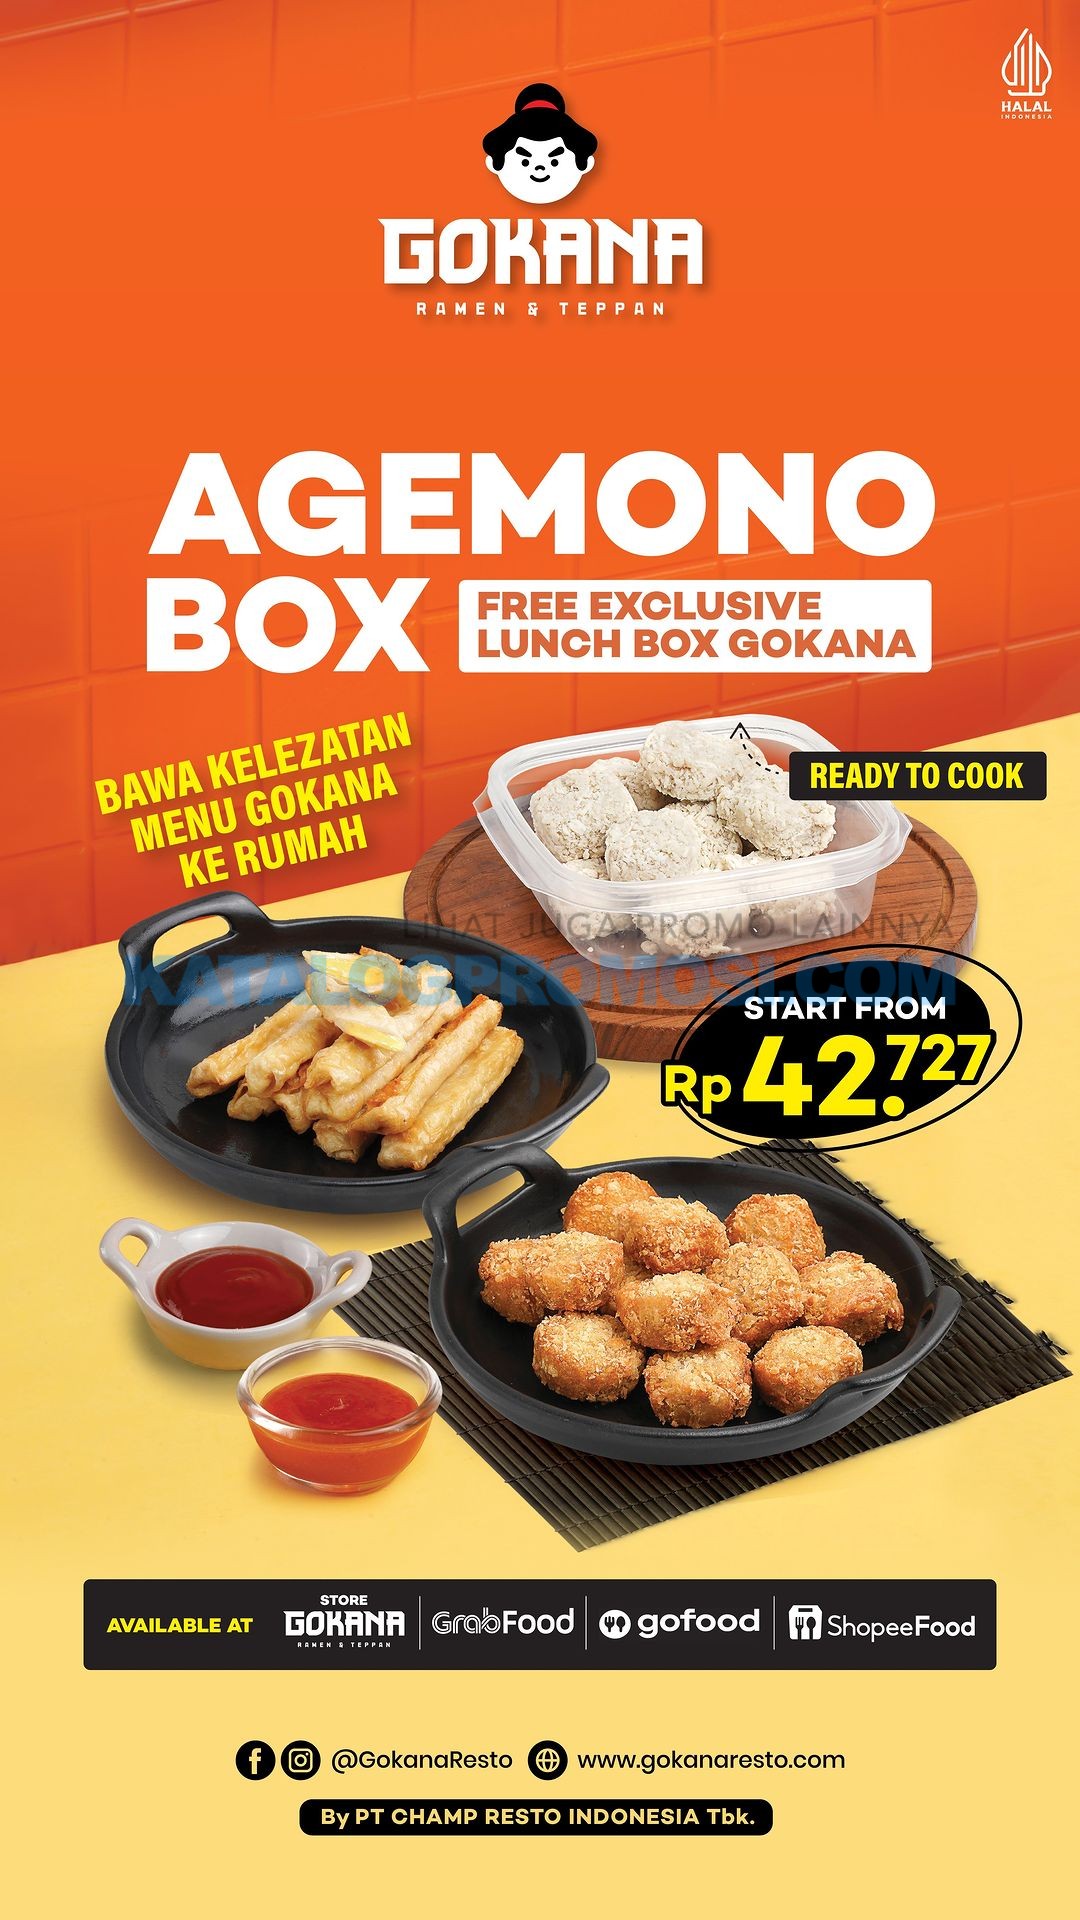 BARU! GOKANA Agemono Box! Sudah termasuk Exclusive Lunch Box GOKANA GRATIS!